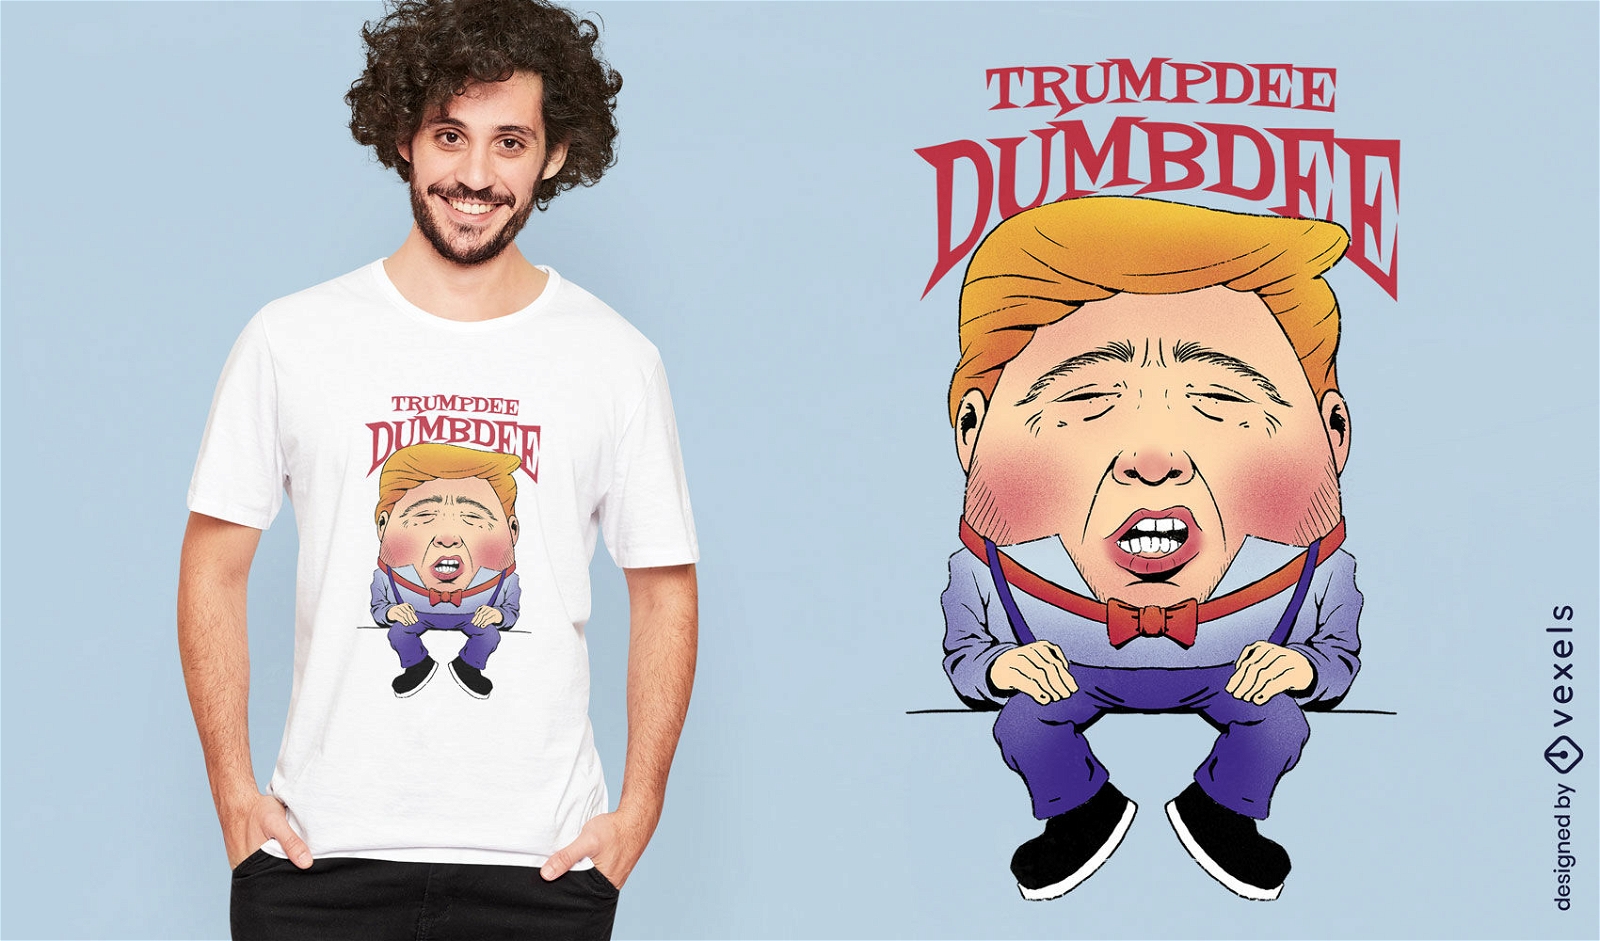 Funny USA president t-shirt design